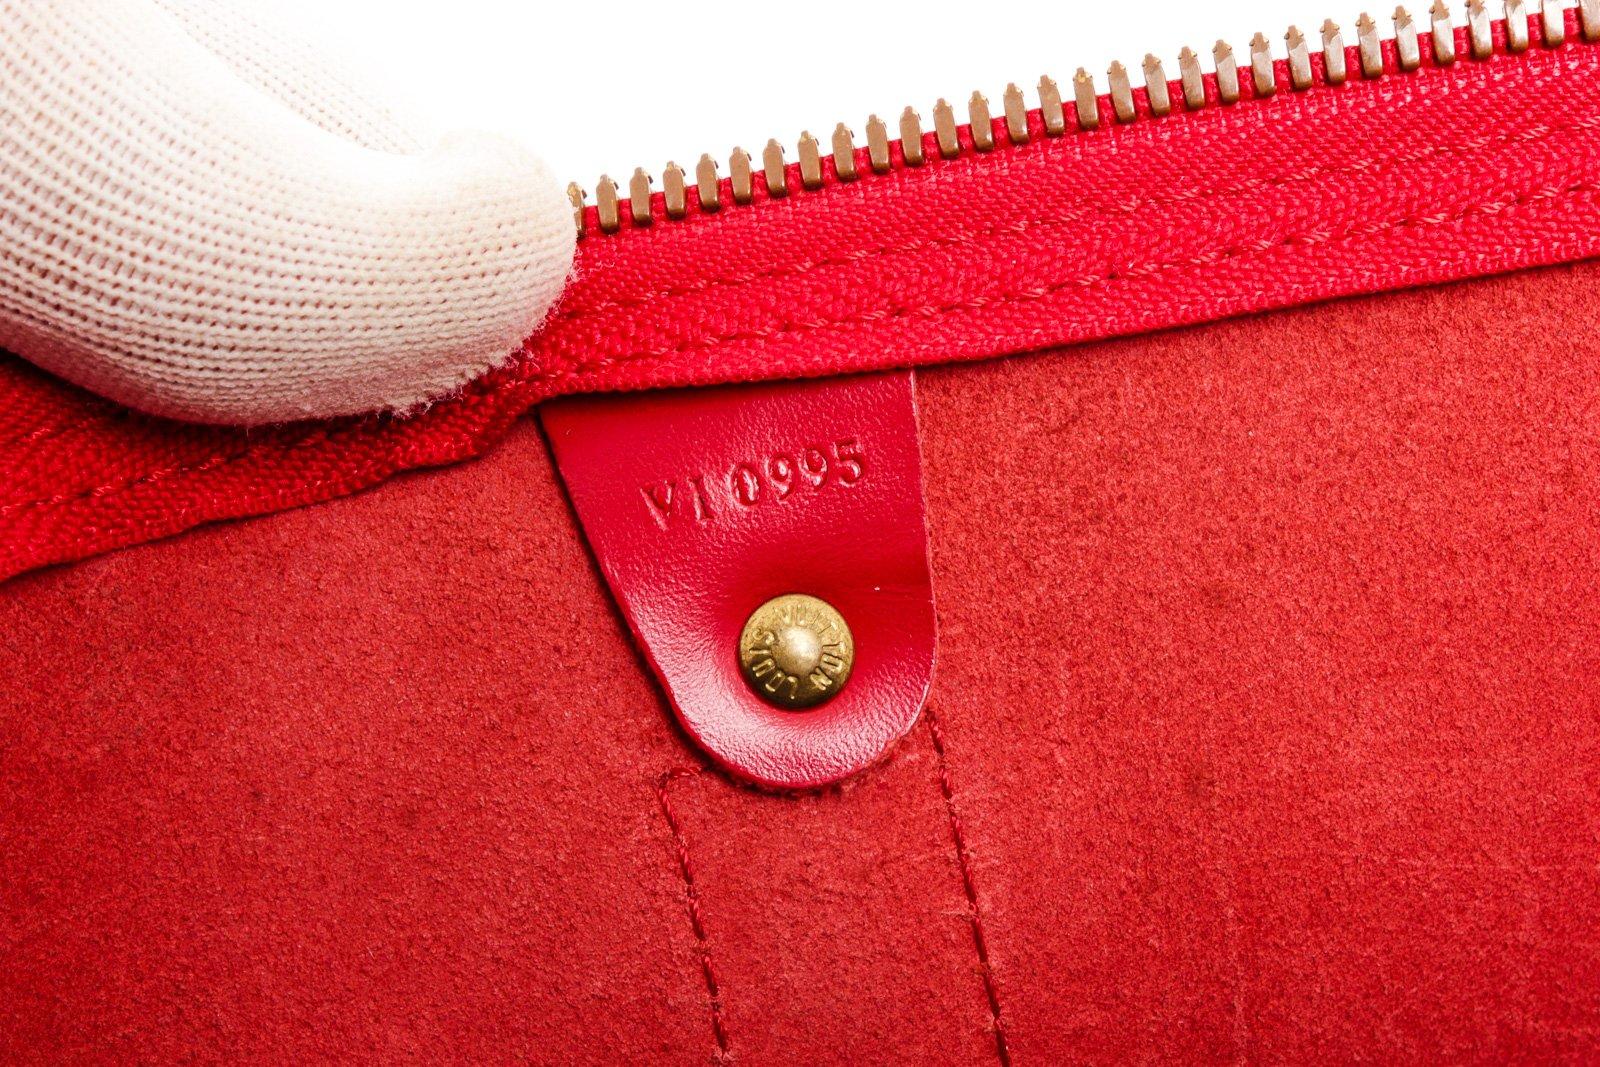 Louis Vuitton Red Monogram Epi leather Keepall 50cm Shoulder Bag with silver-tone hardware, tan vachetta leather trim, interior zip pockets, top handle, zip closure.

26524MSC